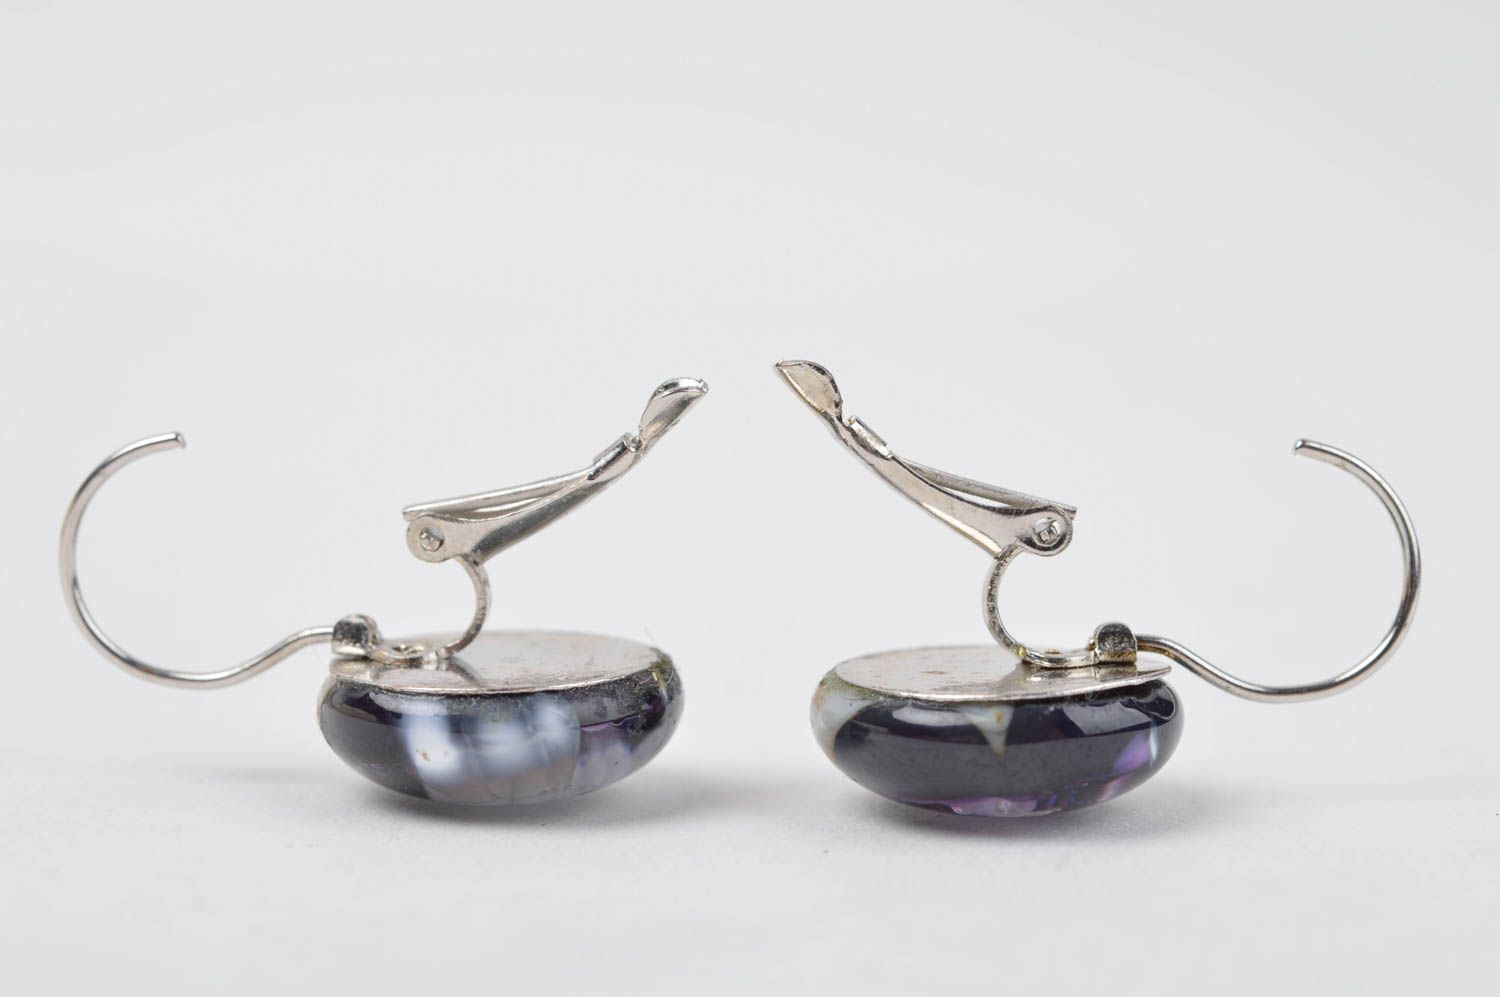 Unusual handmade glass earrings beautiful jewellery handmade gifts for her photo 3